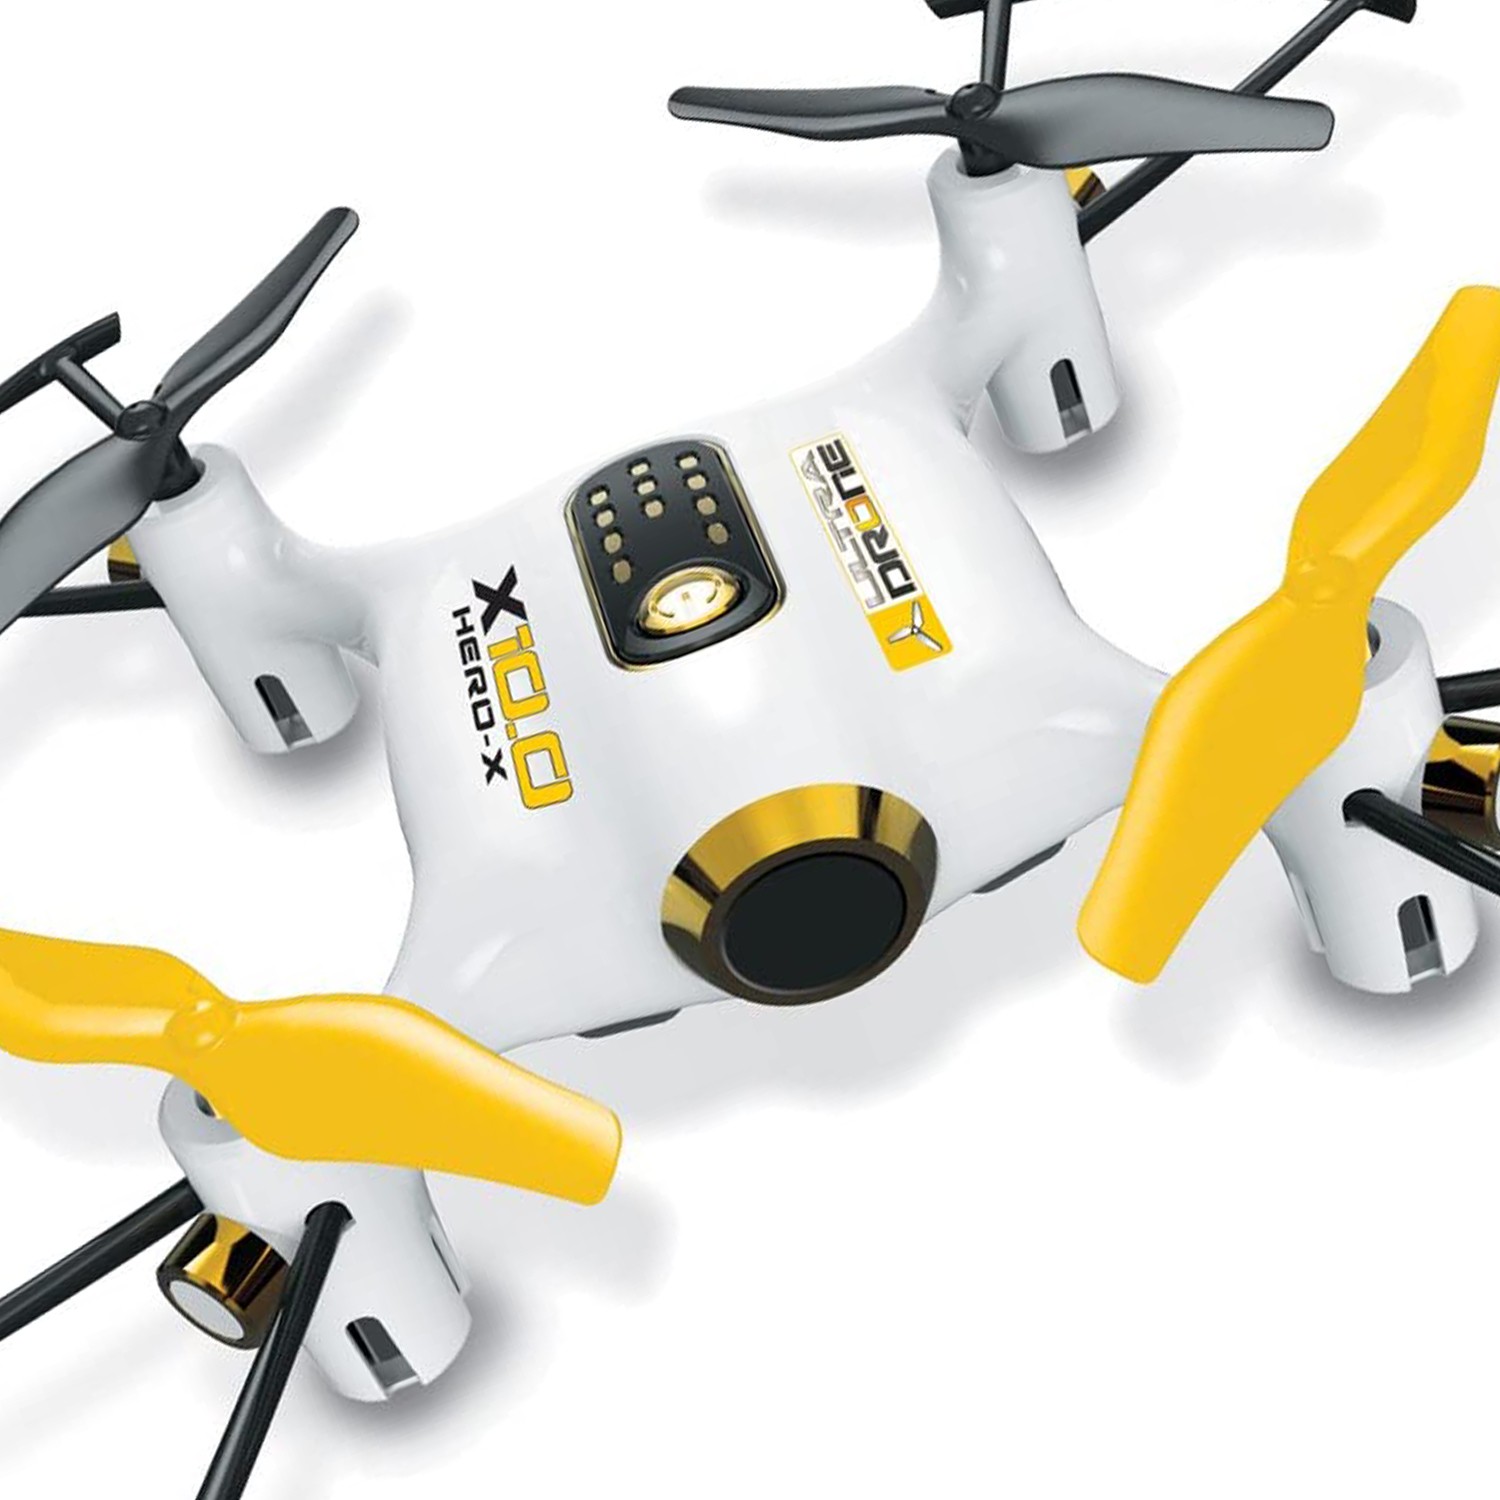 Mondo - 1 - Ultradrone X10.0 Hero-x R/c - Drone Télécommandé - Portée 20 Mètres